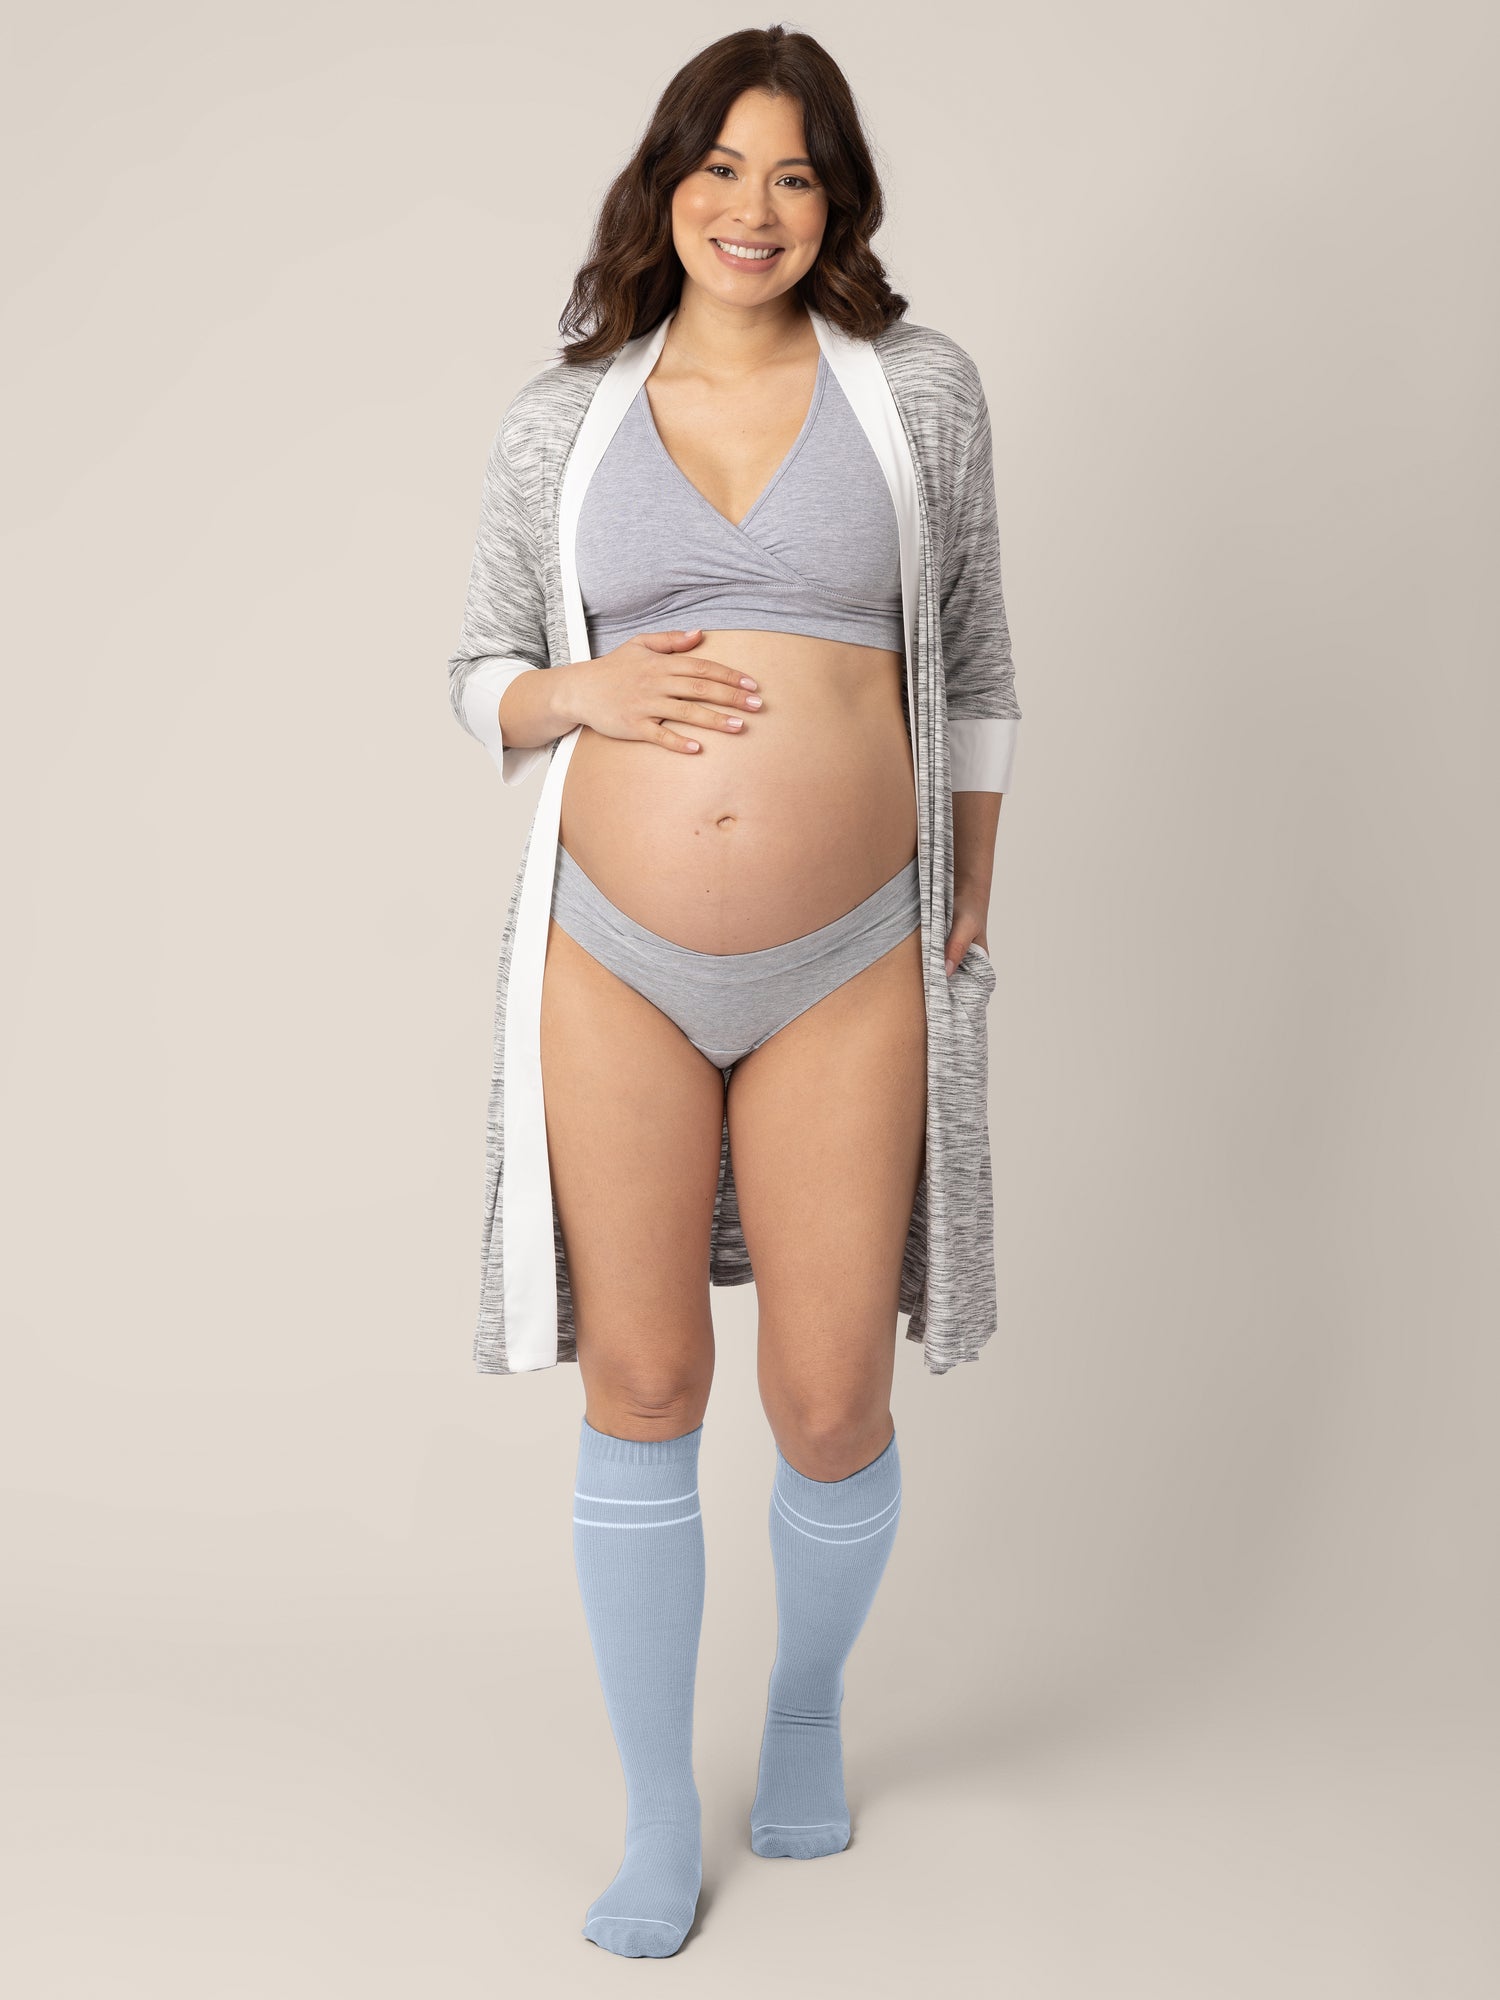 Pregnant model wearing the Premium Maternity Compression Socks in Stone Blue.